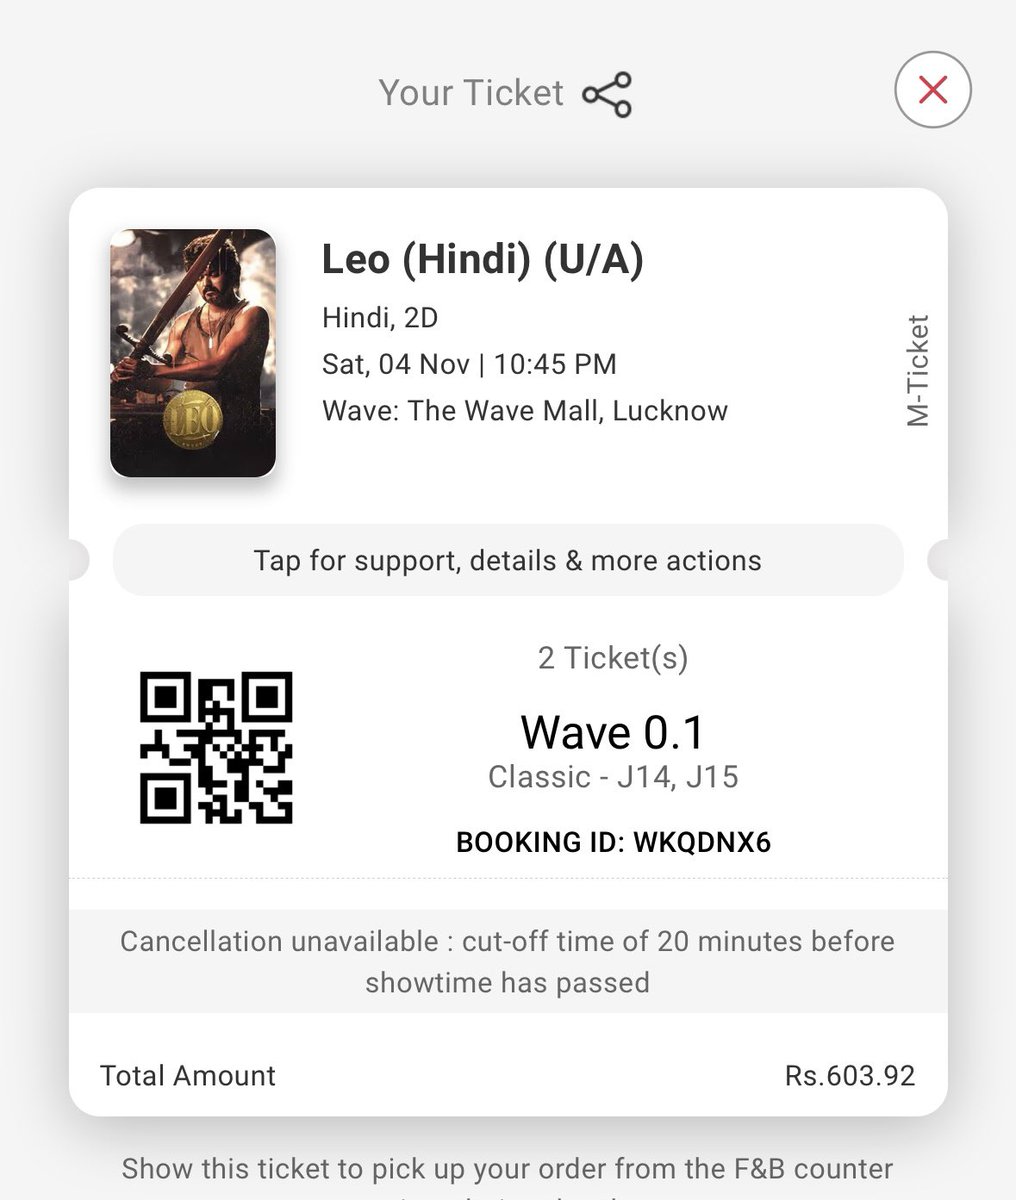 #Leo movie #WaveCinemas #Lucknow